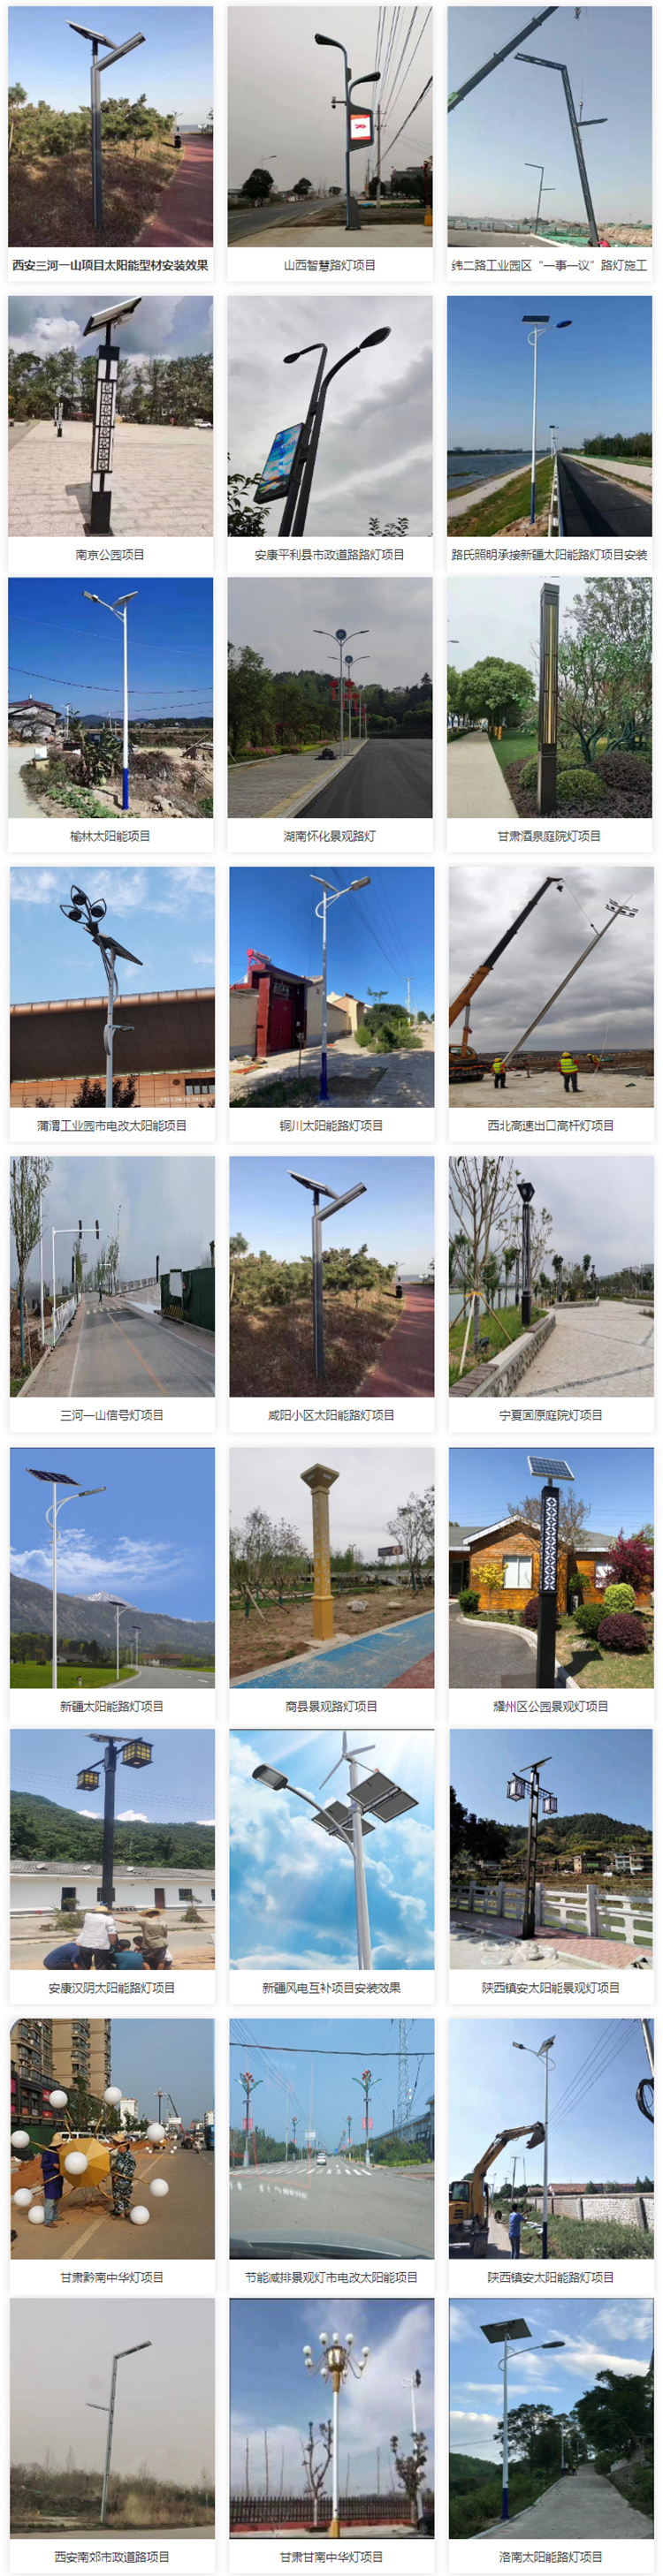 LED landscape lamp column, square courtyard lamp, outdoor lamp, outdoor square, garden road, LED landscape lamp customization